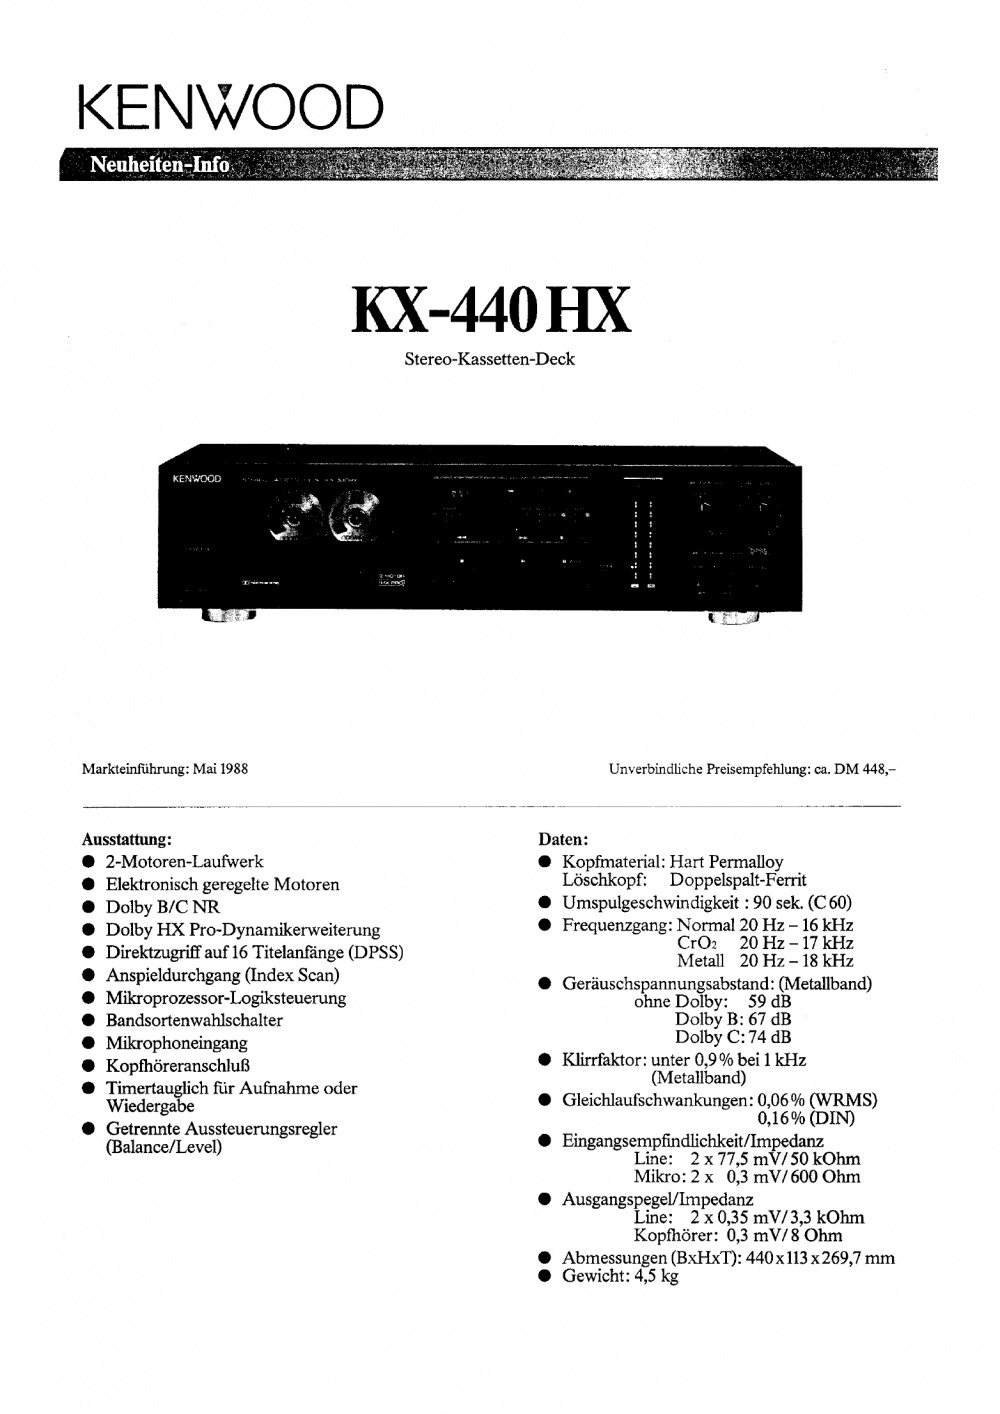 Kenwood KX-440 HX-Prospekt-1988.jpg